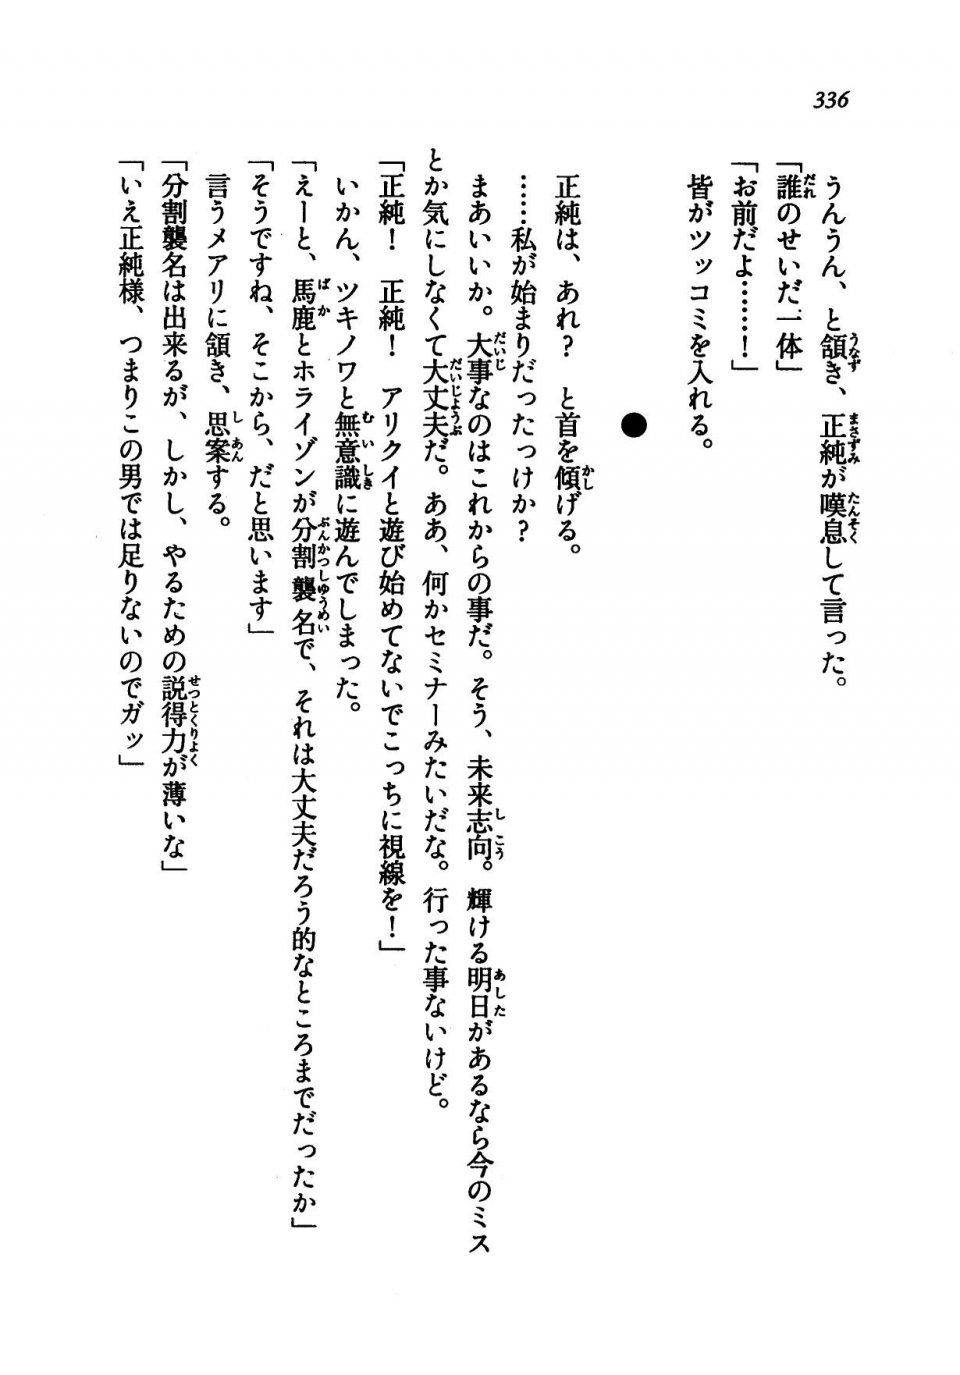 Kyoukai Senjou no Horizon LN Vol 21(8C) Part 1 - Photo #335